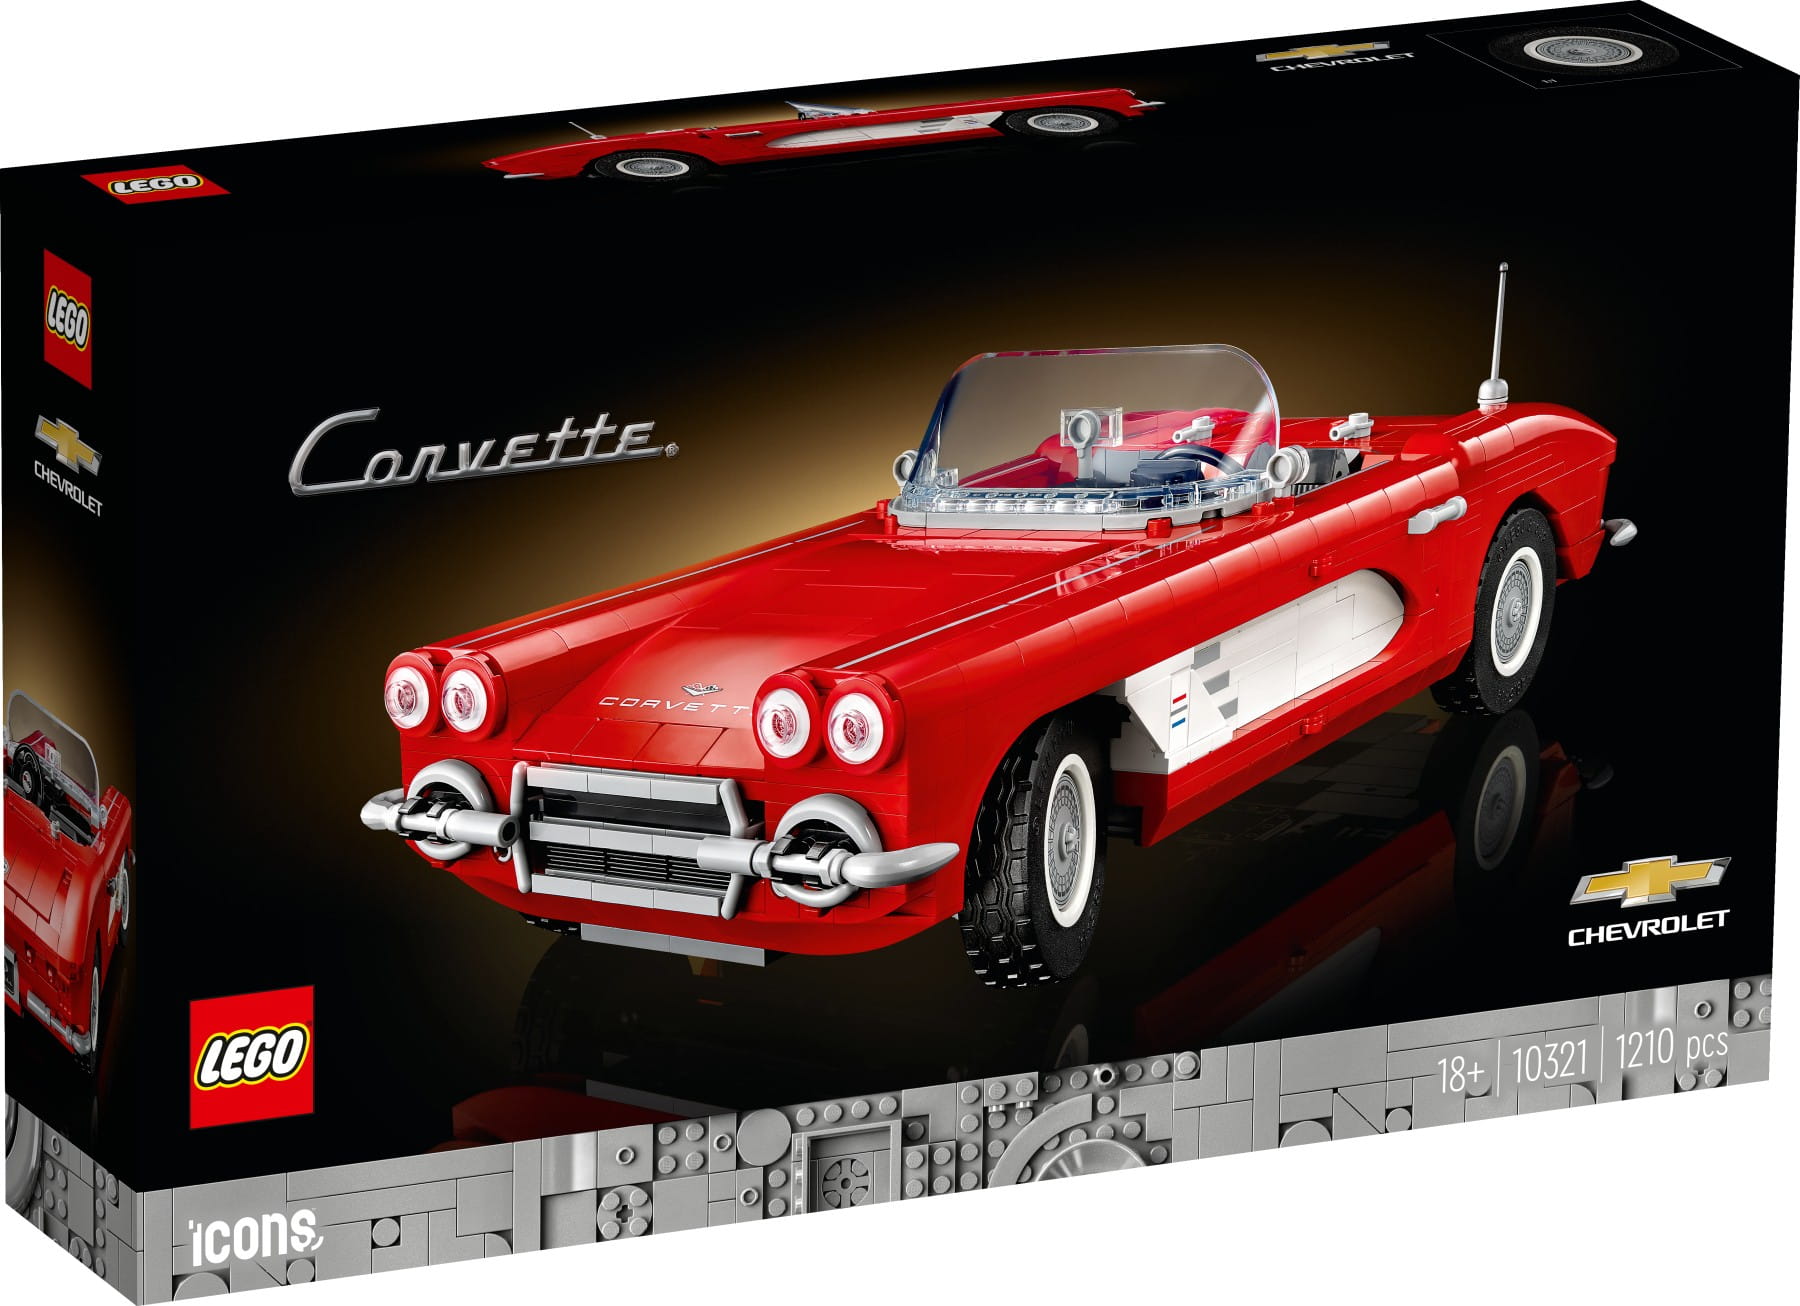 LEGO Icons Chevrolet Corvette Exklusiv Artikel